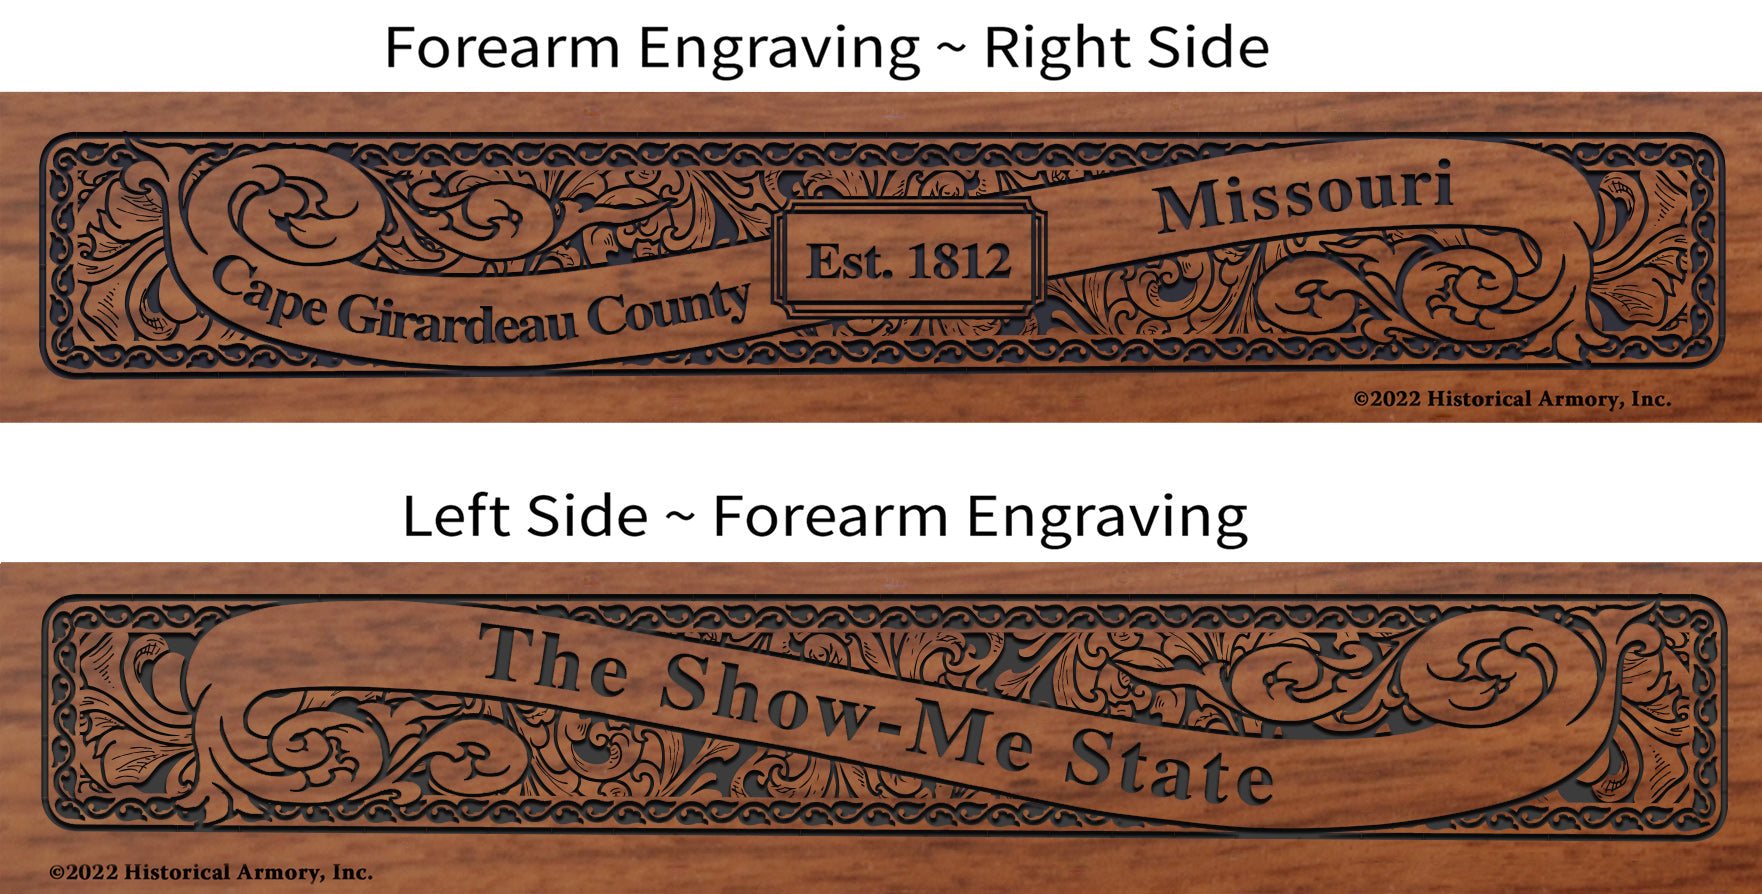 Cape Girardeau County Missouri Engraved Rifle Forearm